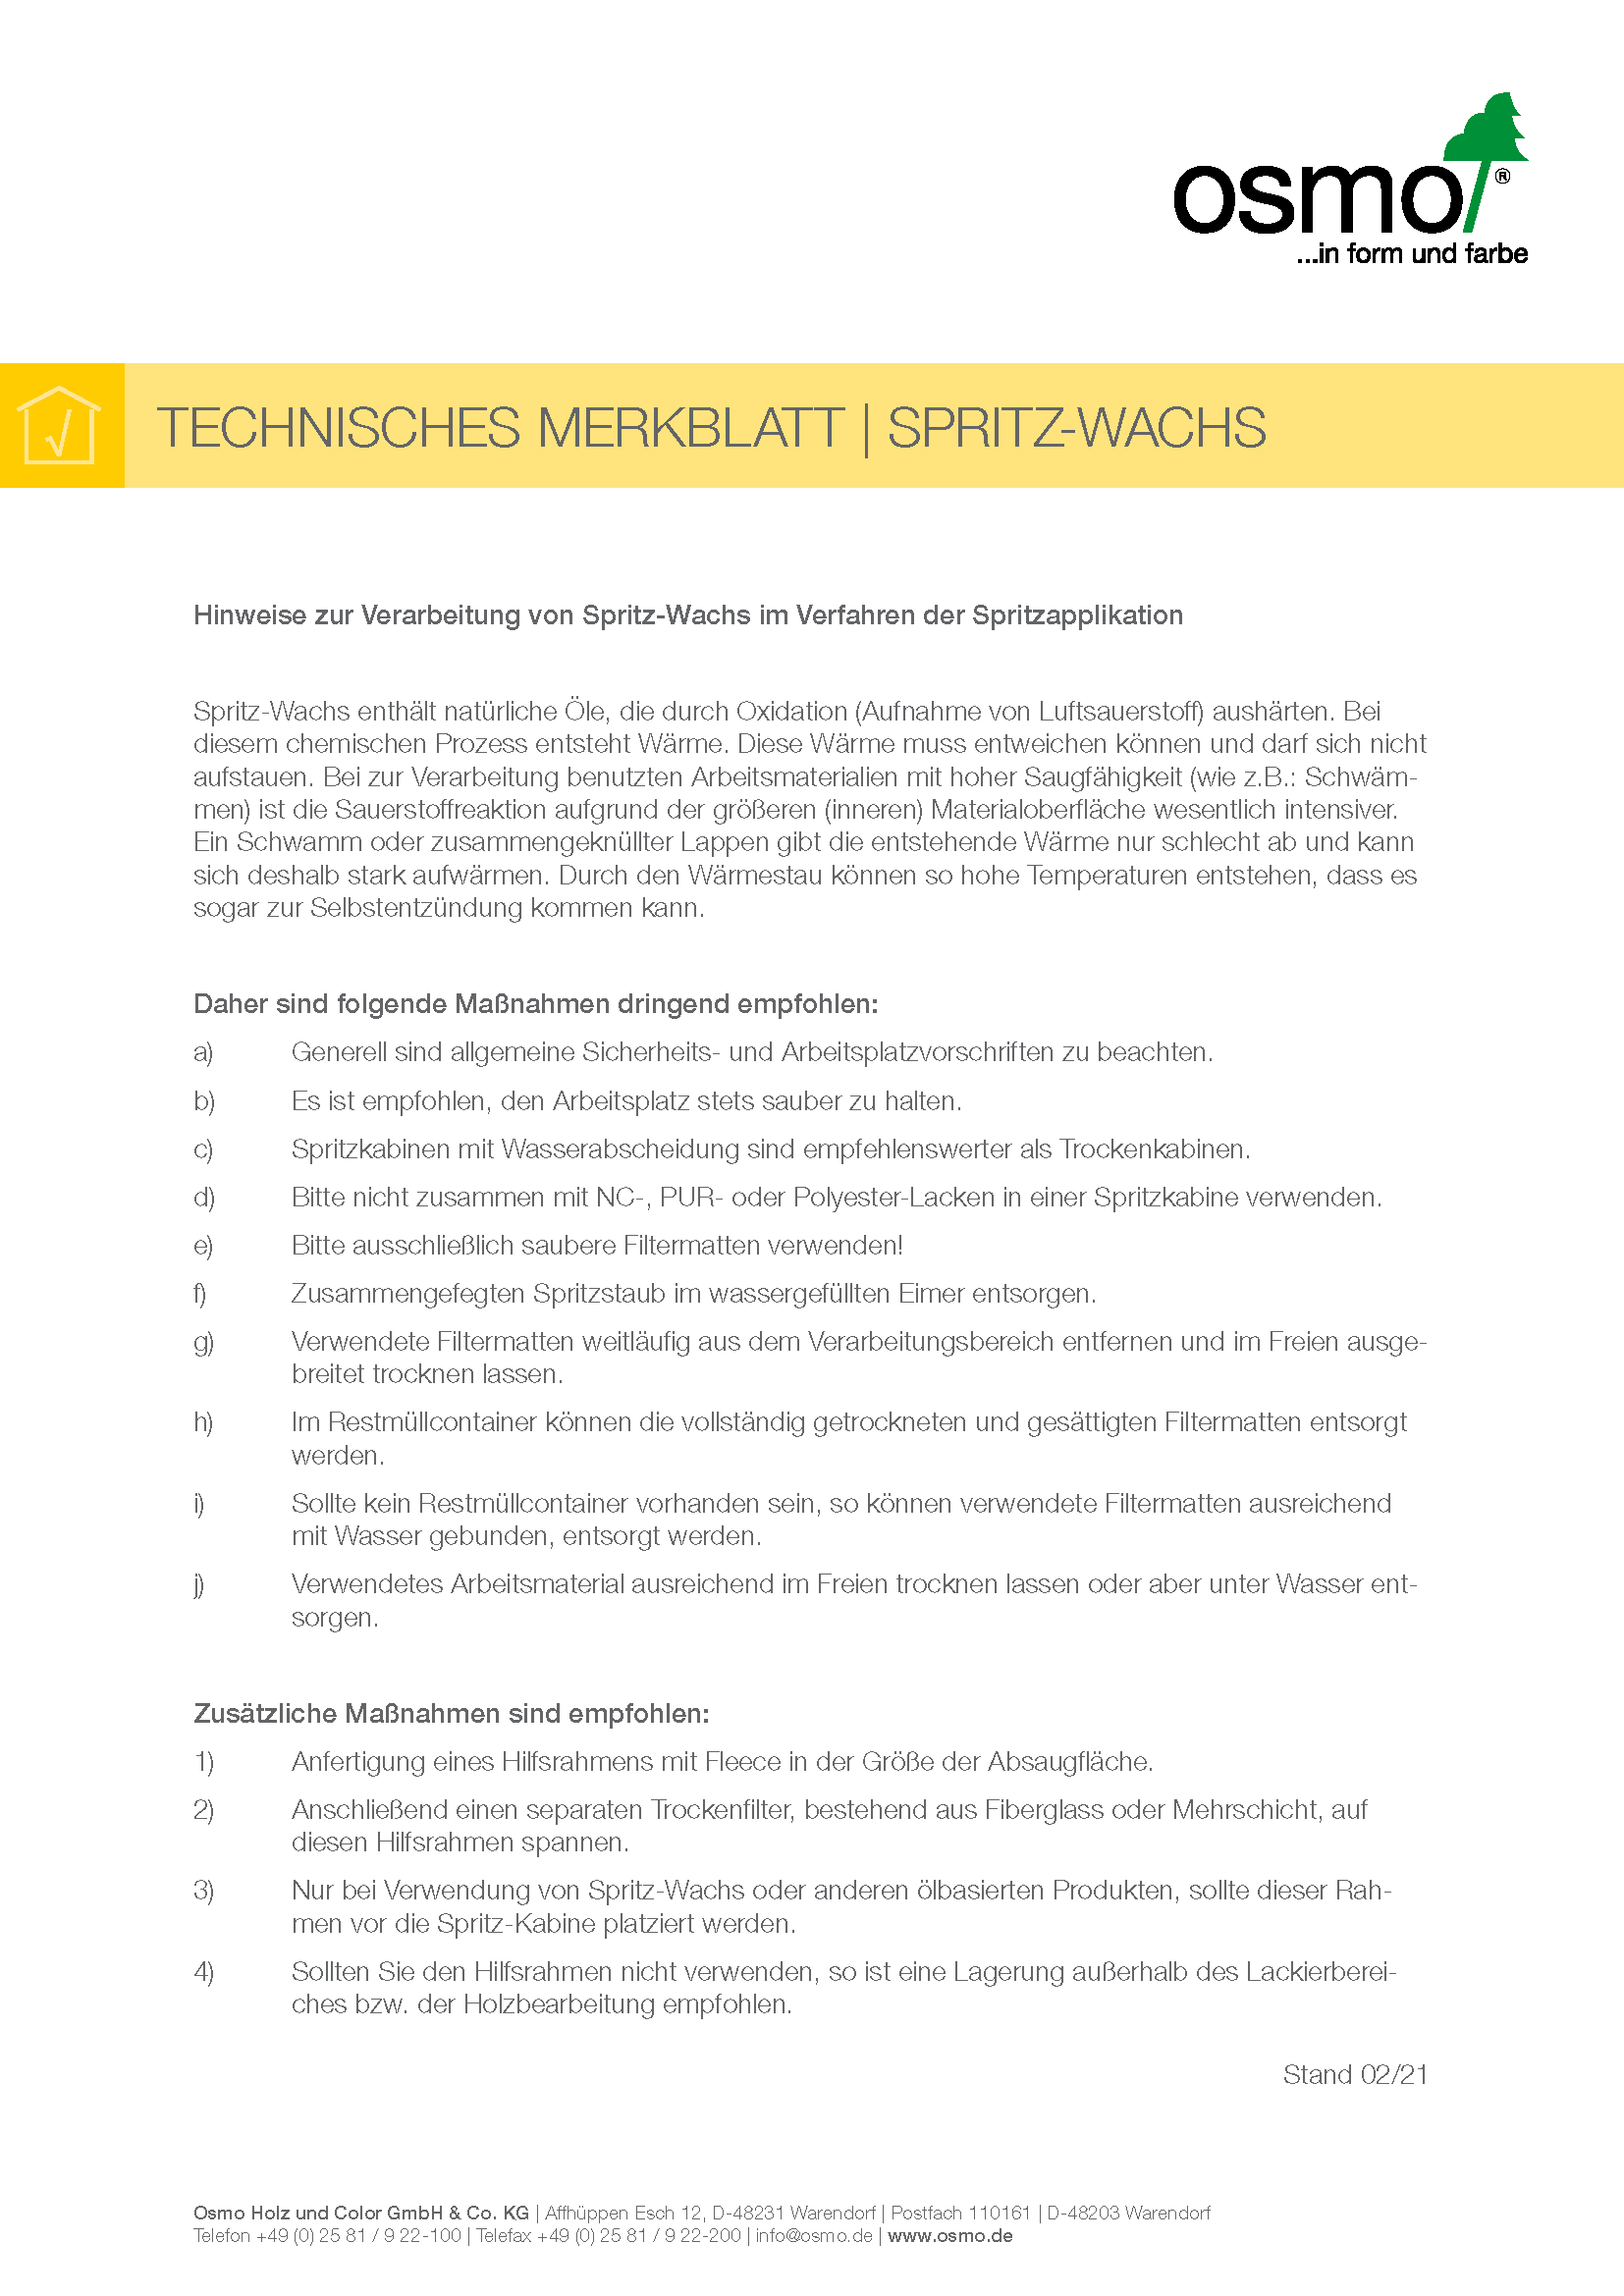 Technisches Merkblatt Osmo Spritz-Wachs